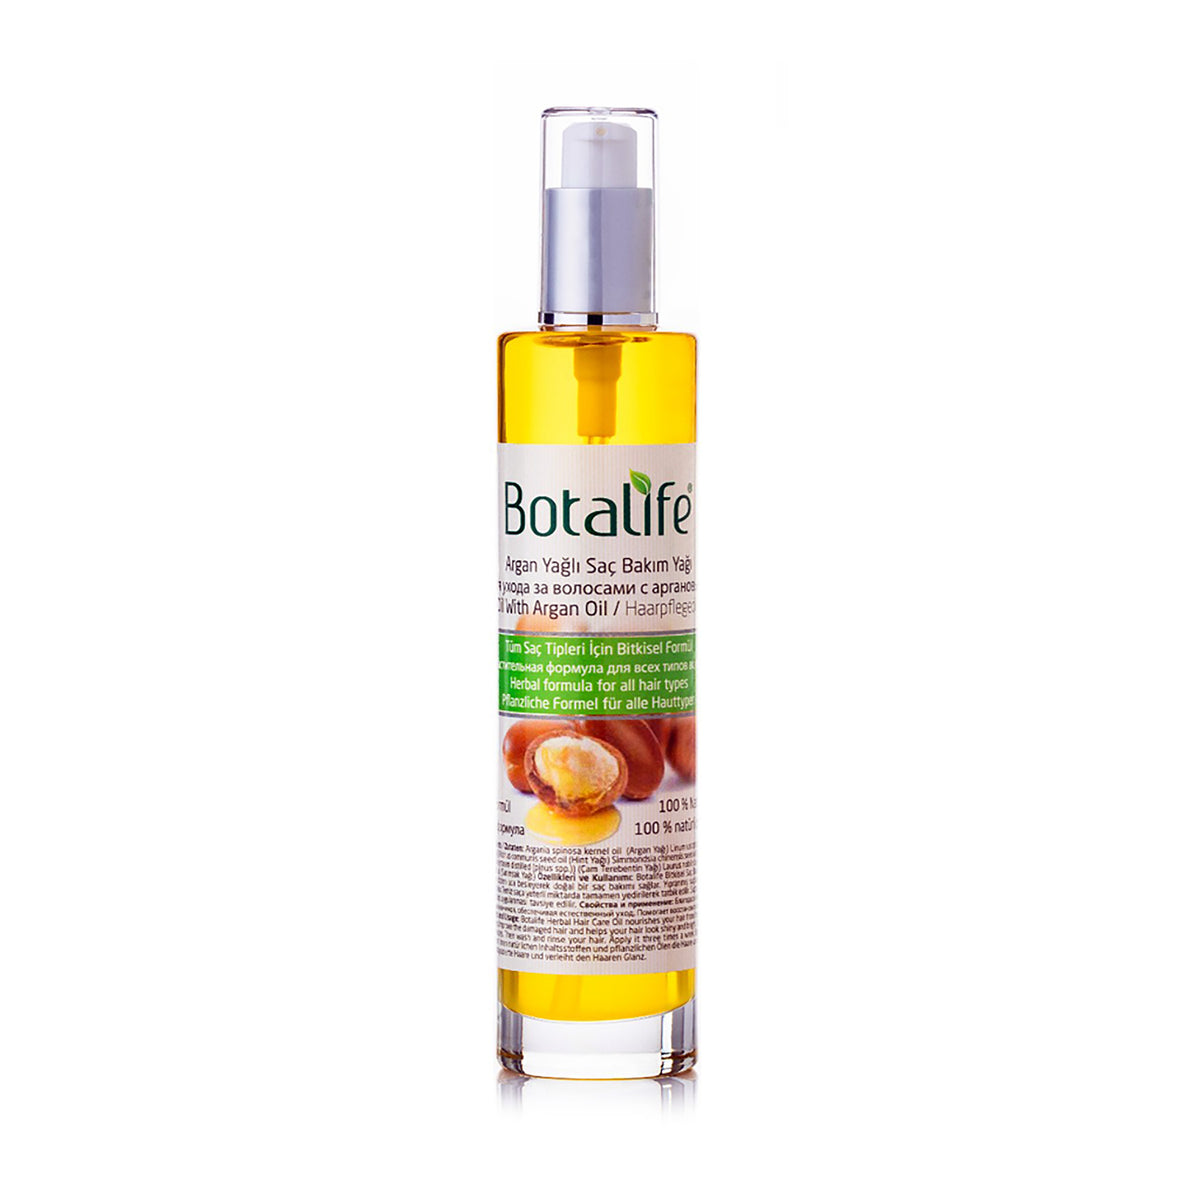 Botalife Argan Hari care oil  the ultimate hair remedy with Argan Hair Care Oil Blend